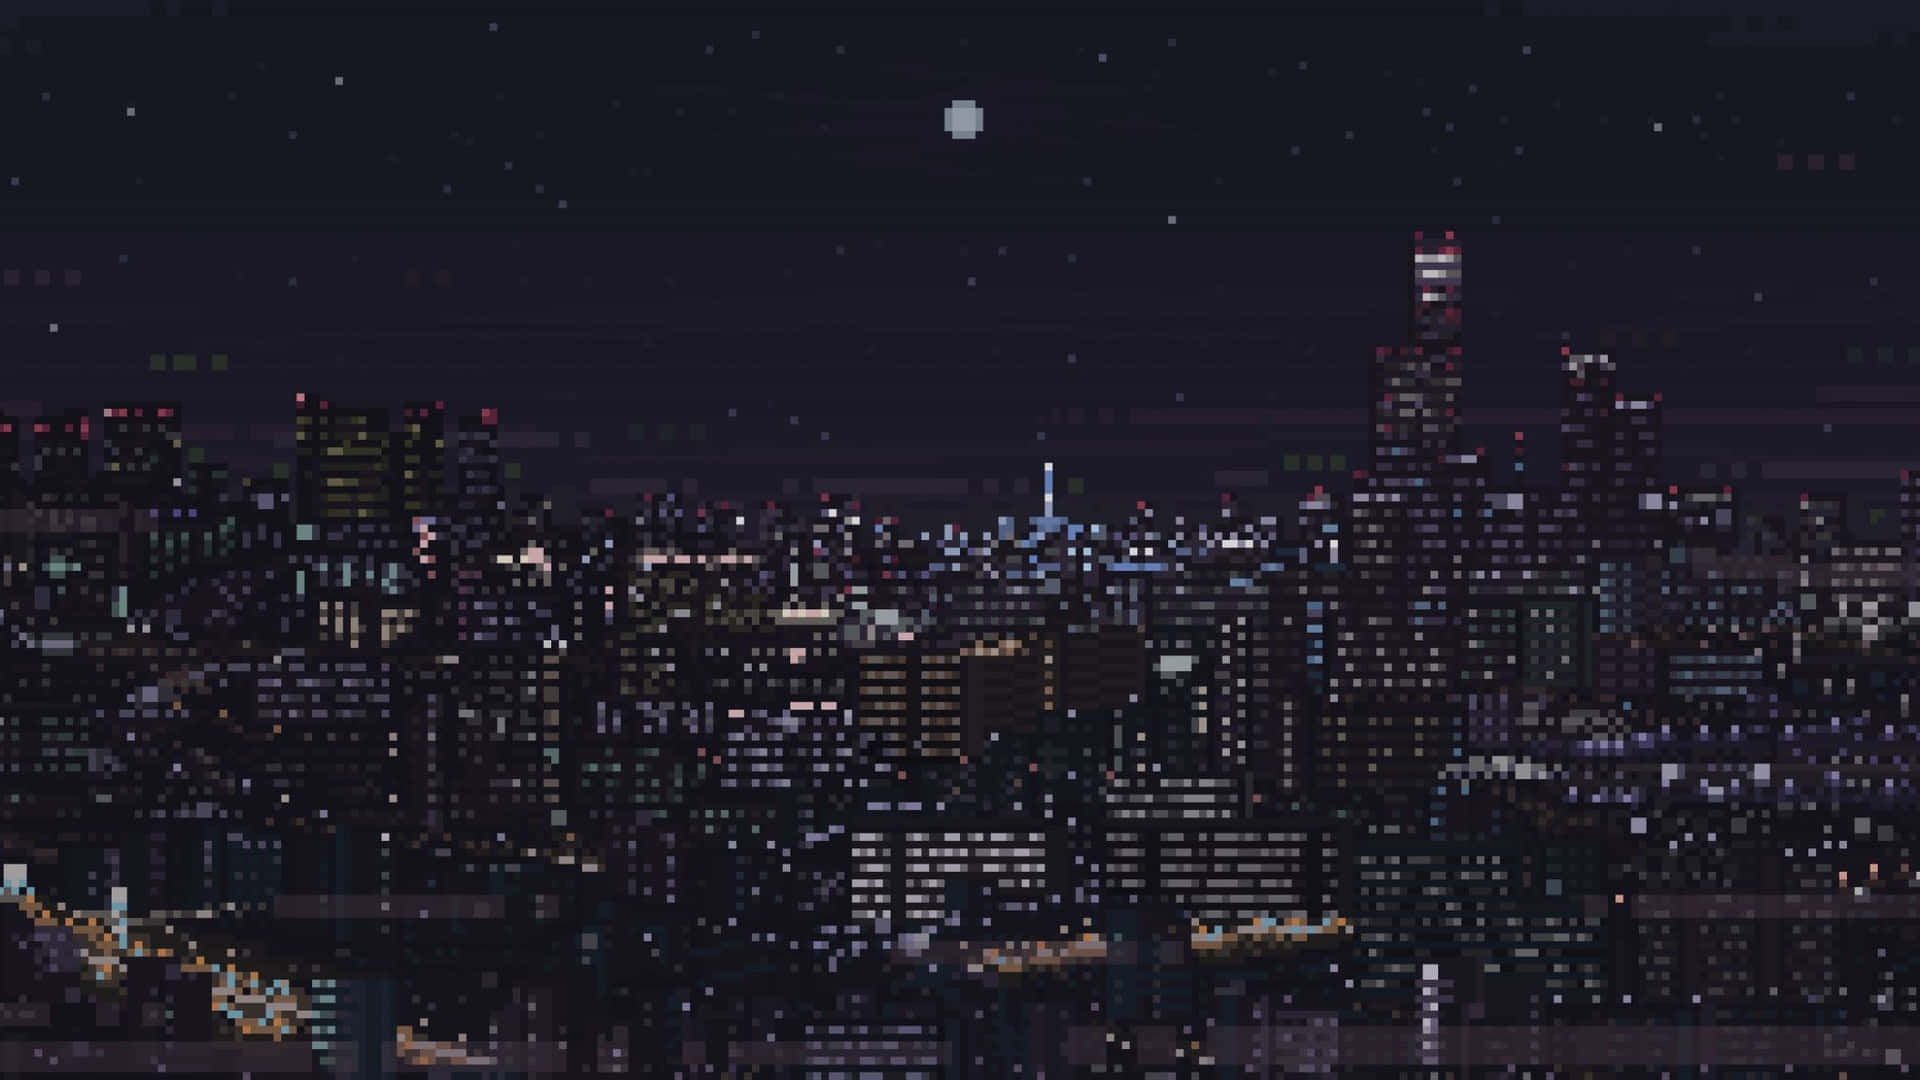 Pixel Art Cityscape At Night